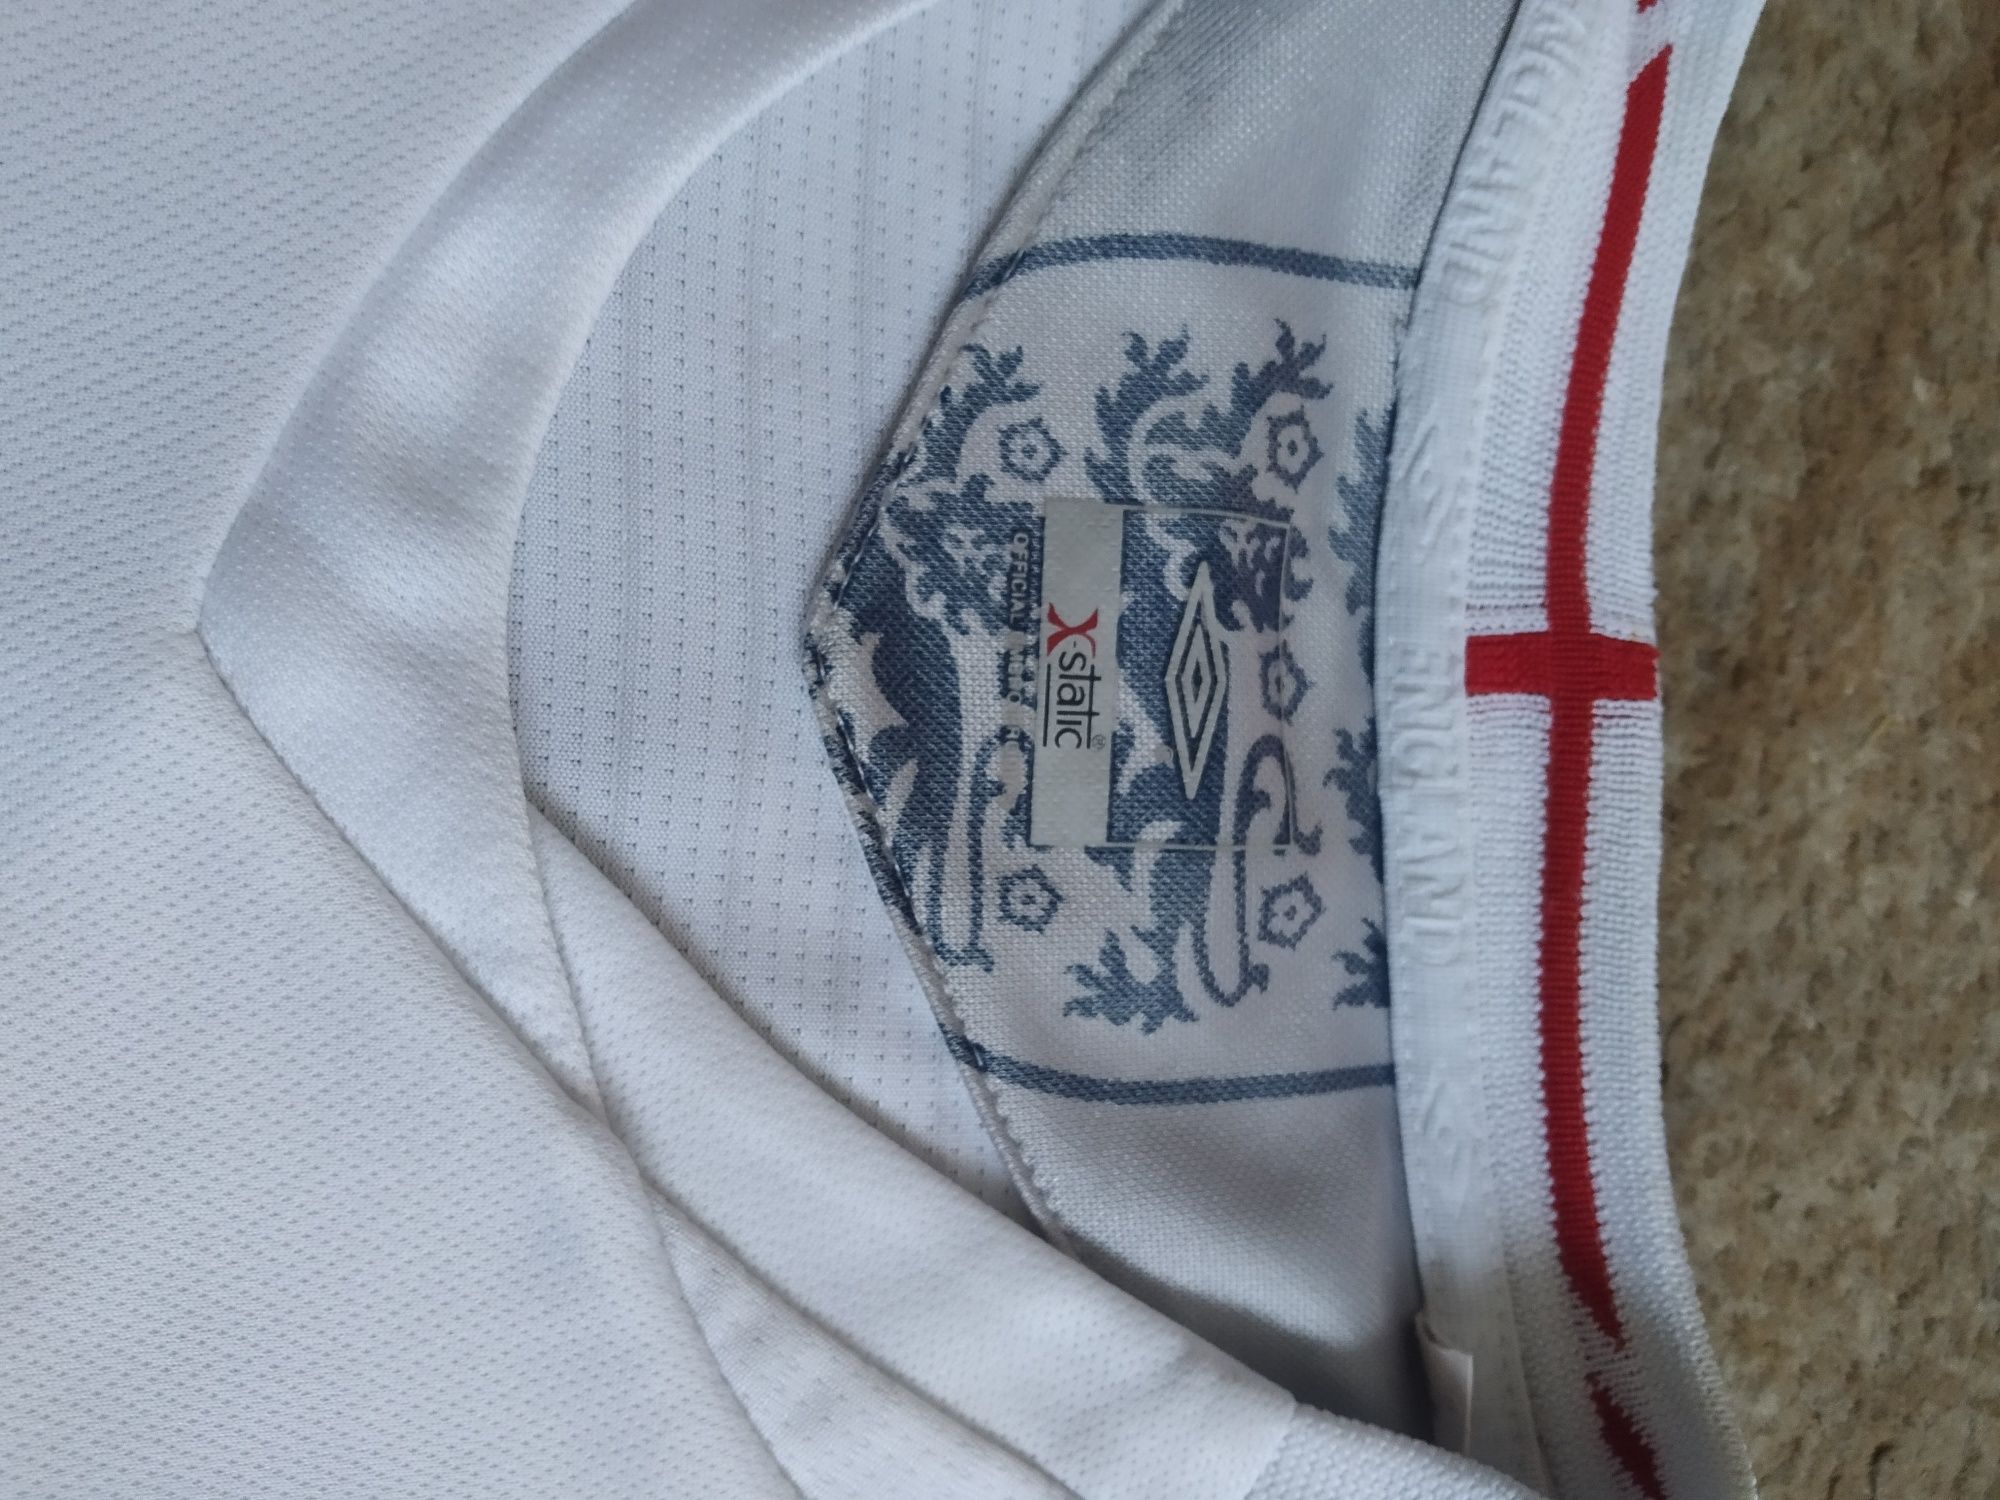 Oryginalna koszulka piłkarska reprezentacji Anglii.  Umbro.